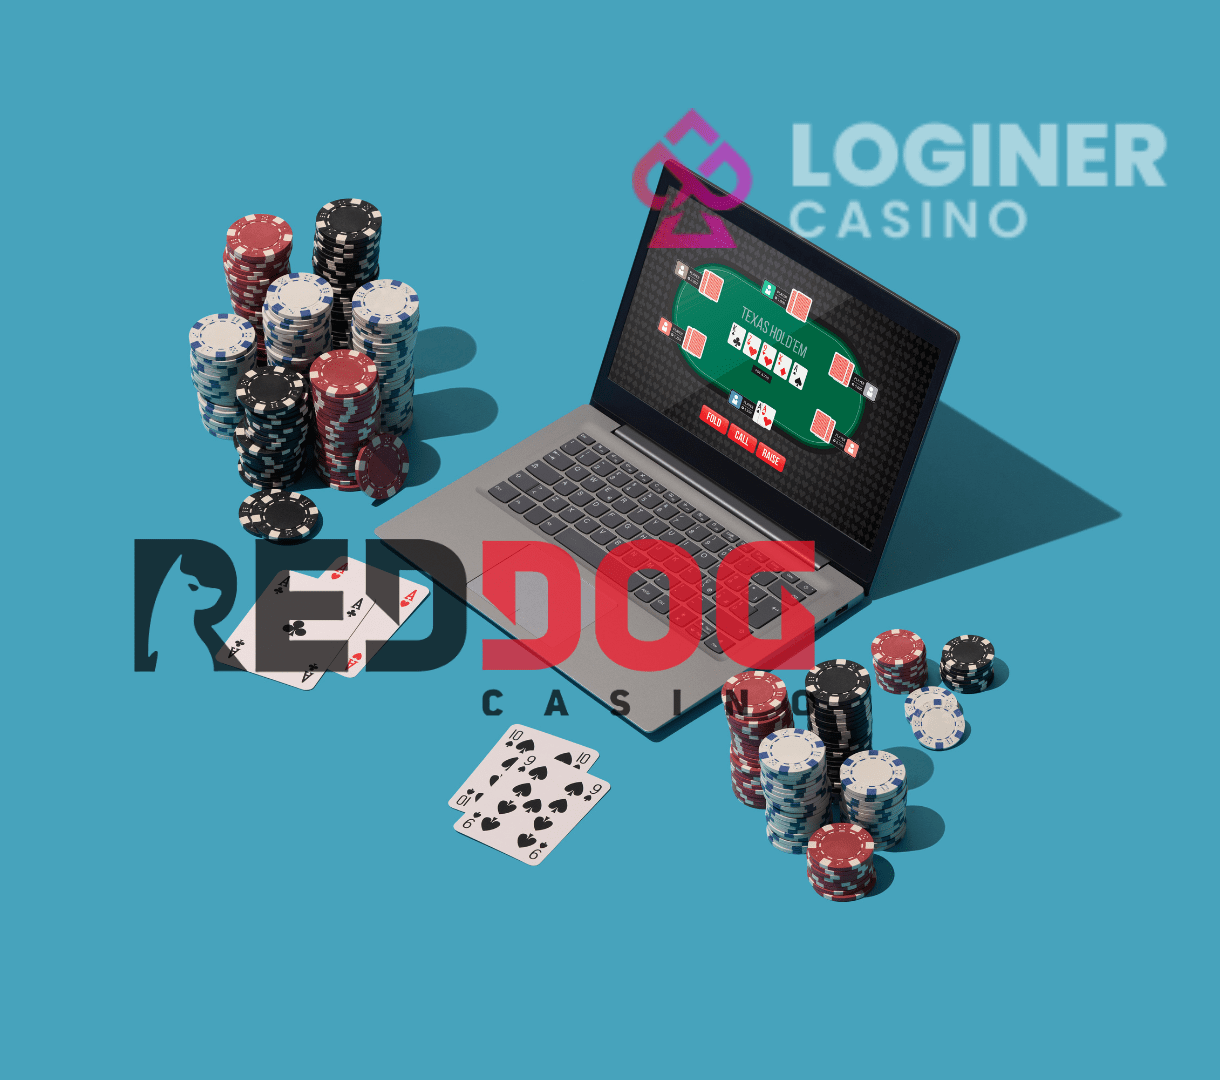 Mobile Red Dog Mobile Casino